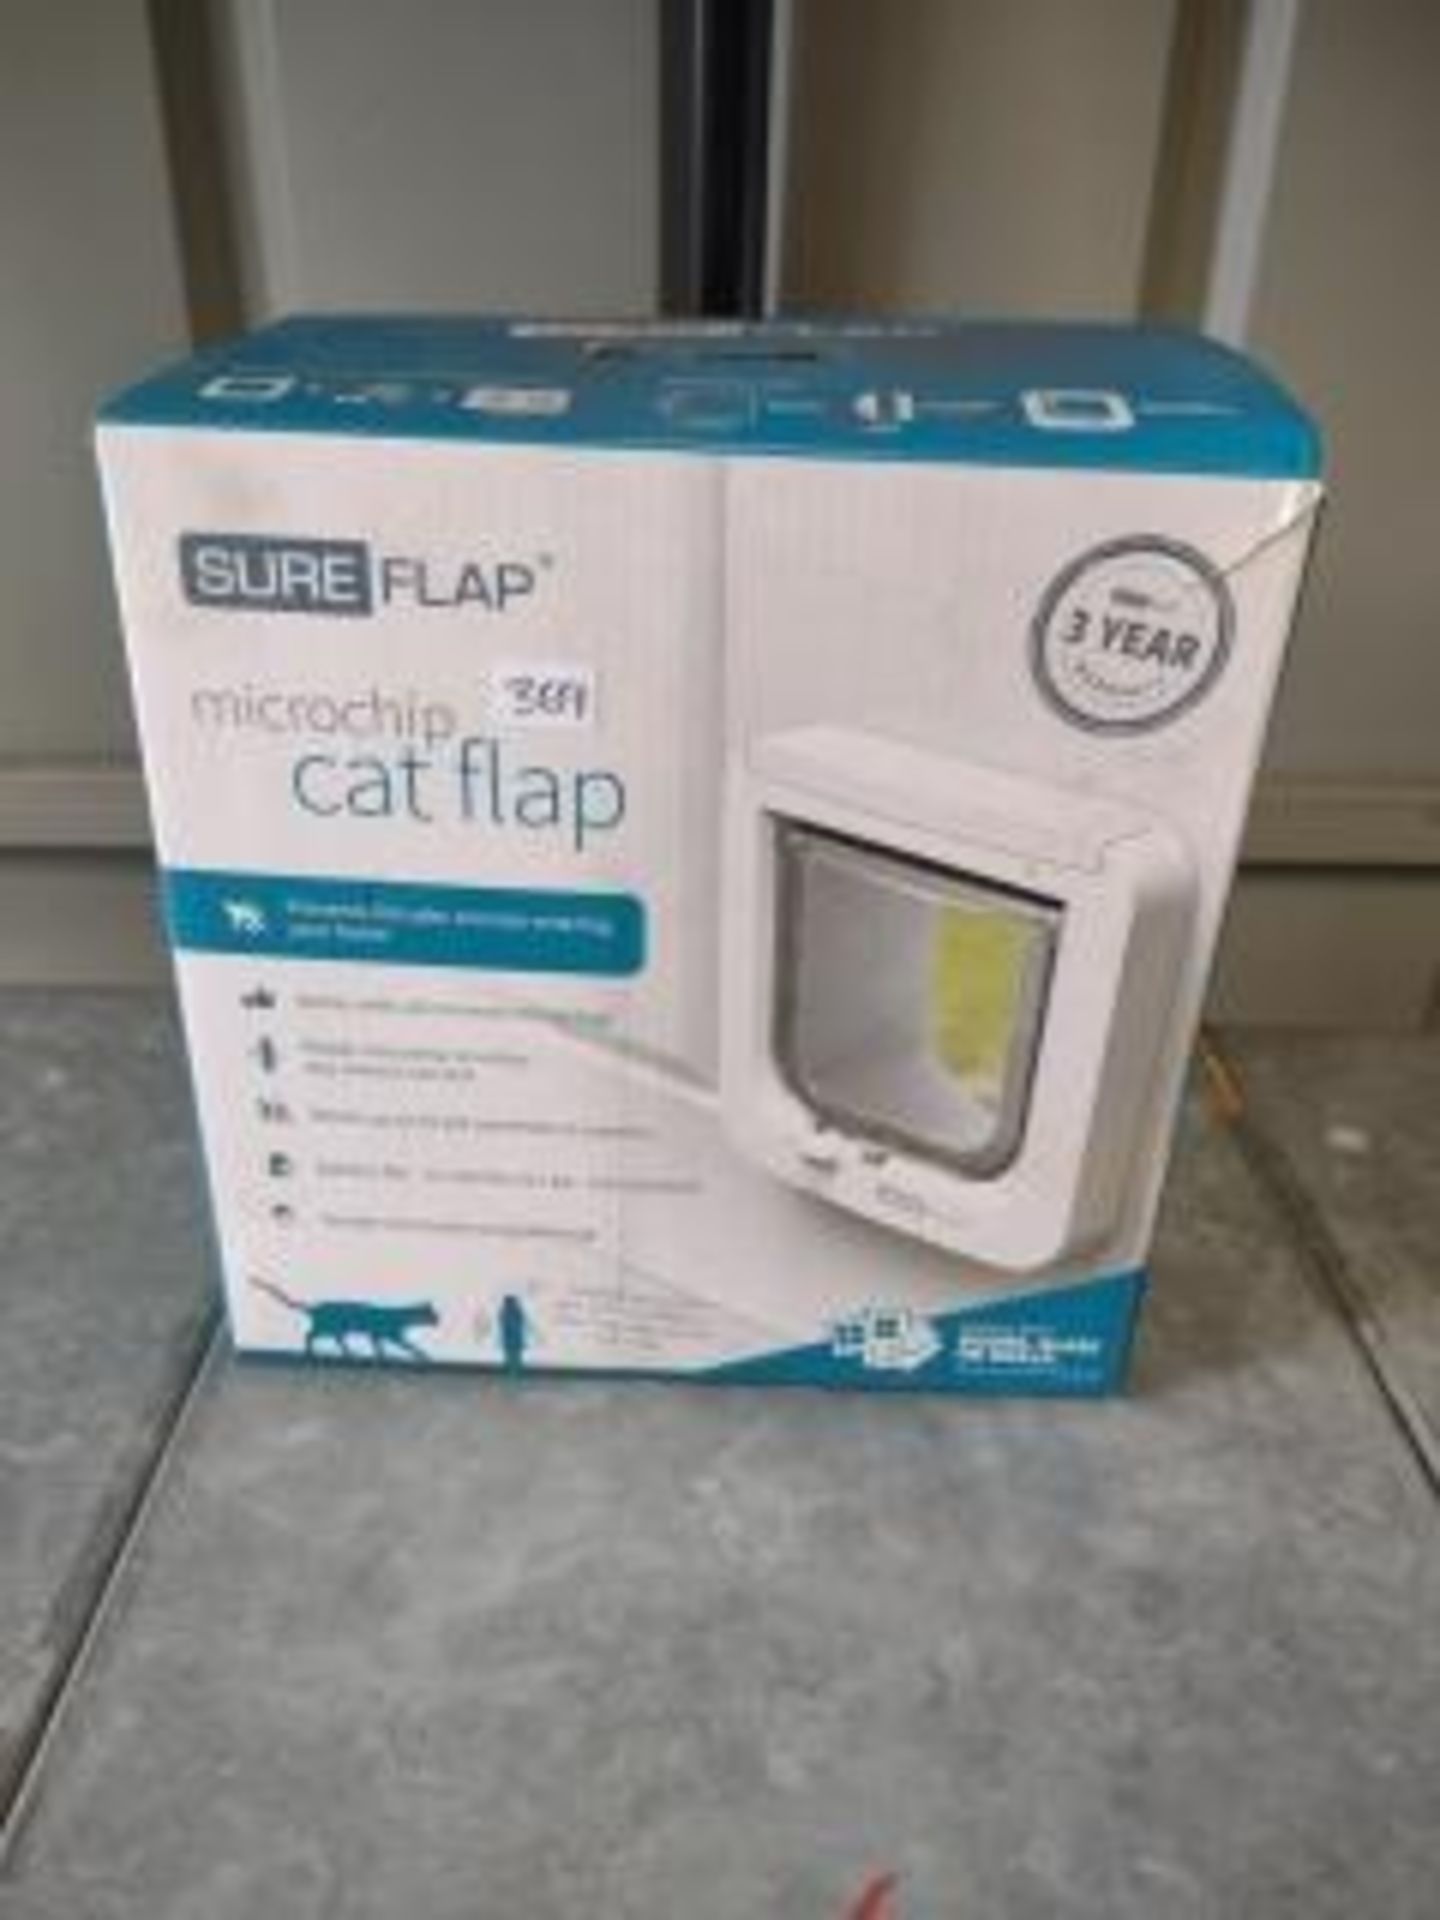 Sureflap microchip cat flap RRP £53 Grade U